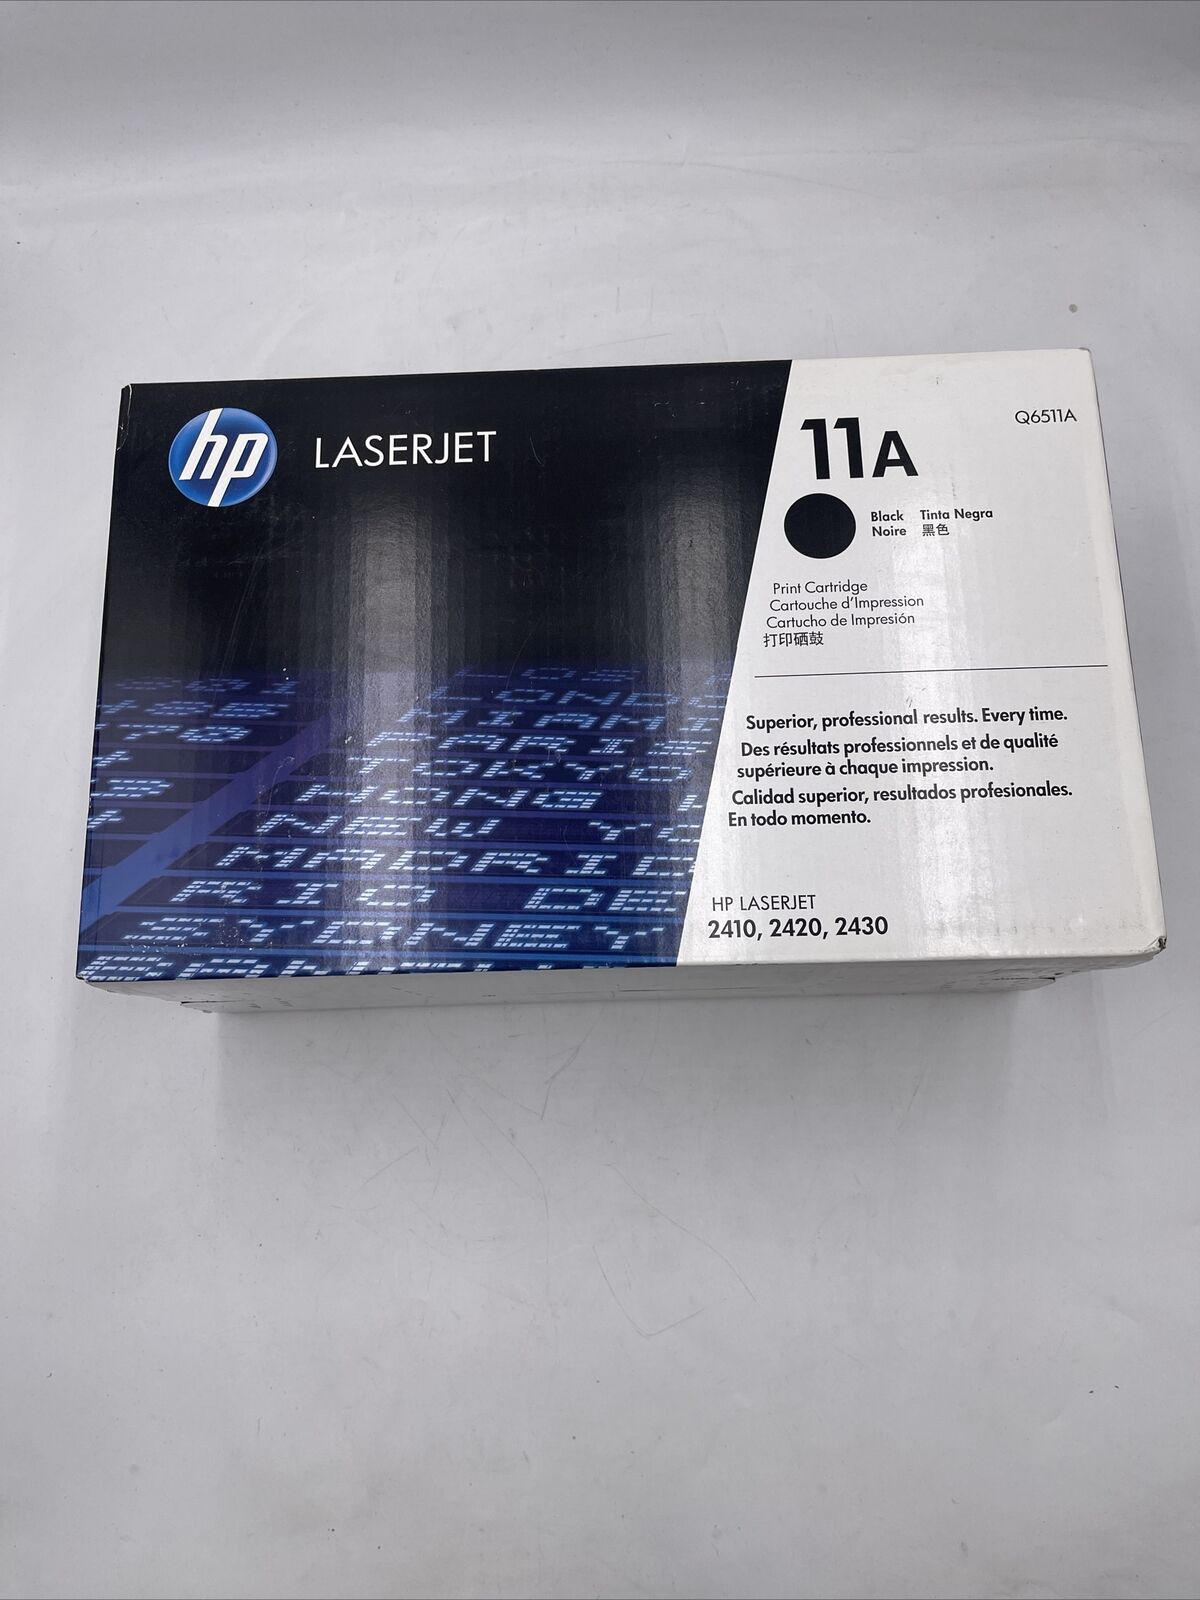 HP Laserjet Printer Cartridge Q6511A Black HP 11A Toner